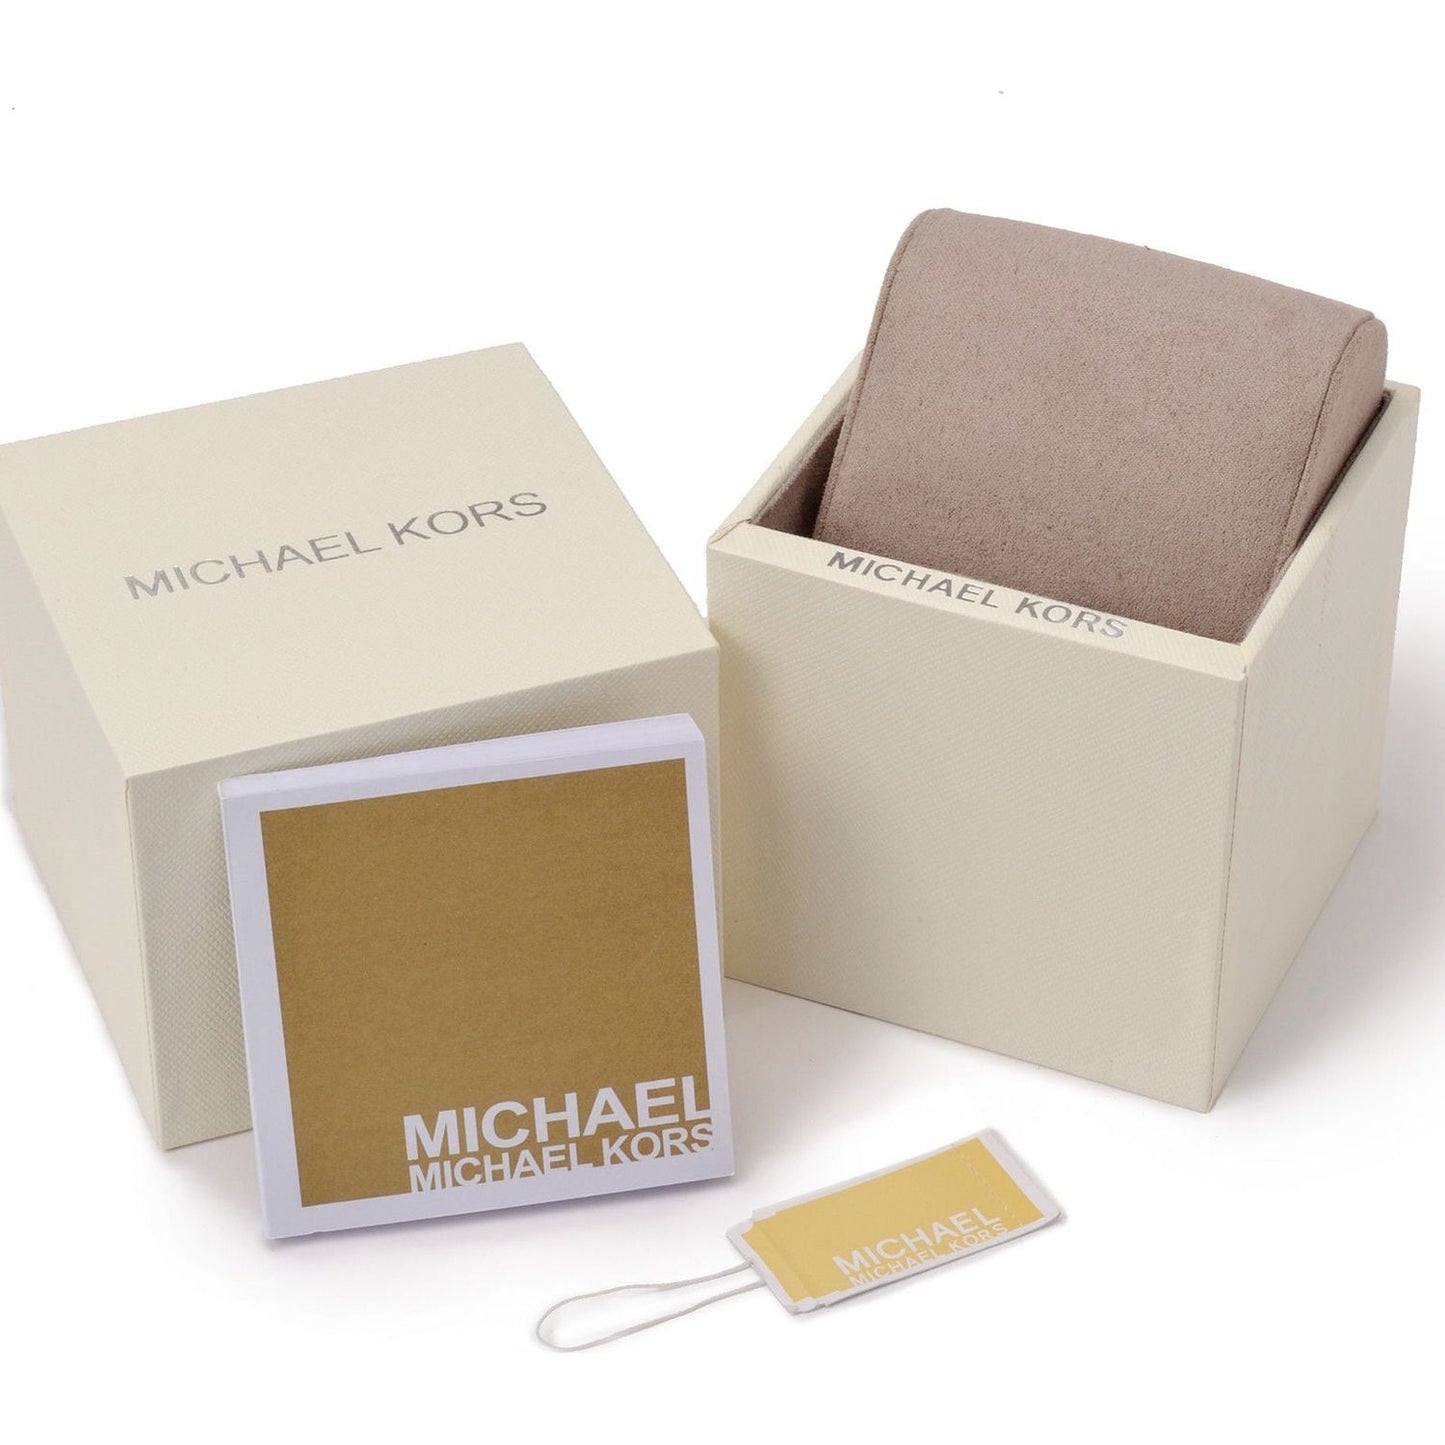 MICHAEL KORS MICHAEL KORS Mod. MELISSA Special Pack + Bracelet WATCHES michael-kors-mod-melissa-special-pack-bracelet-1